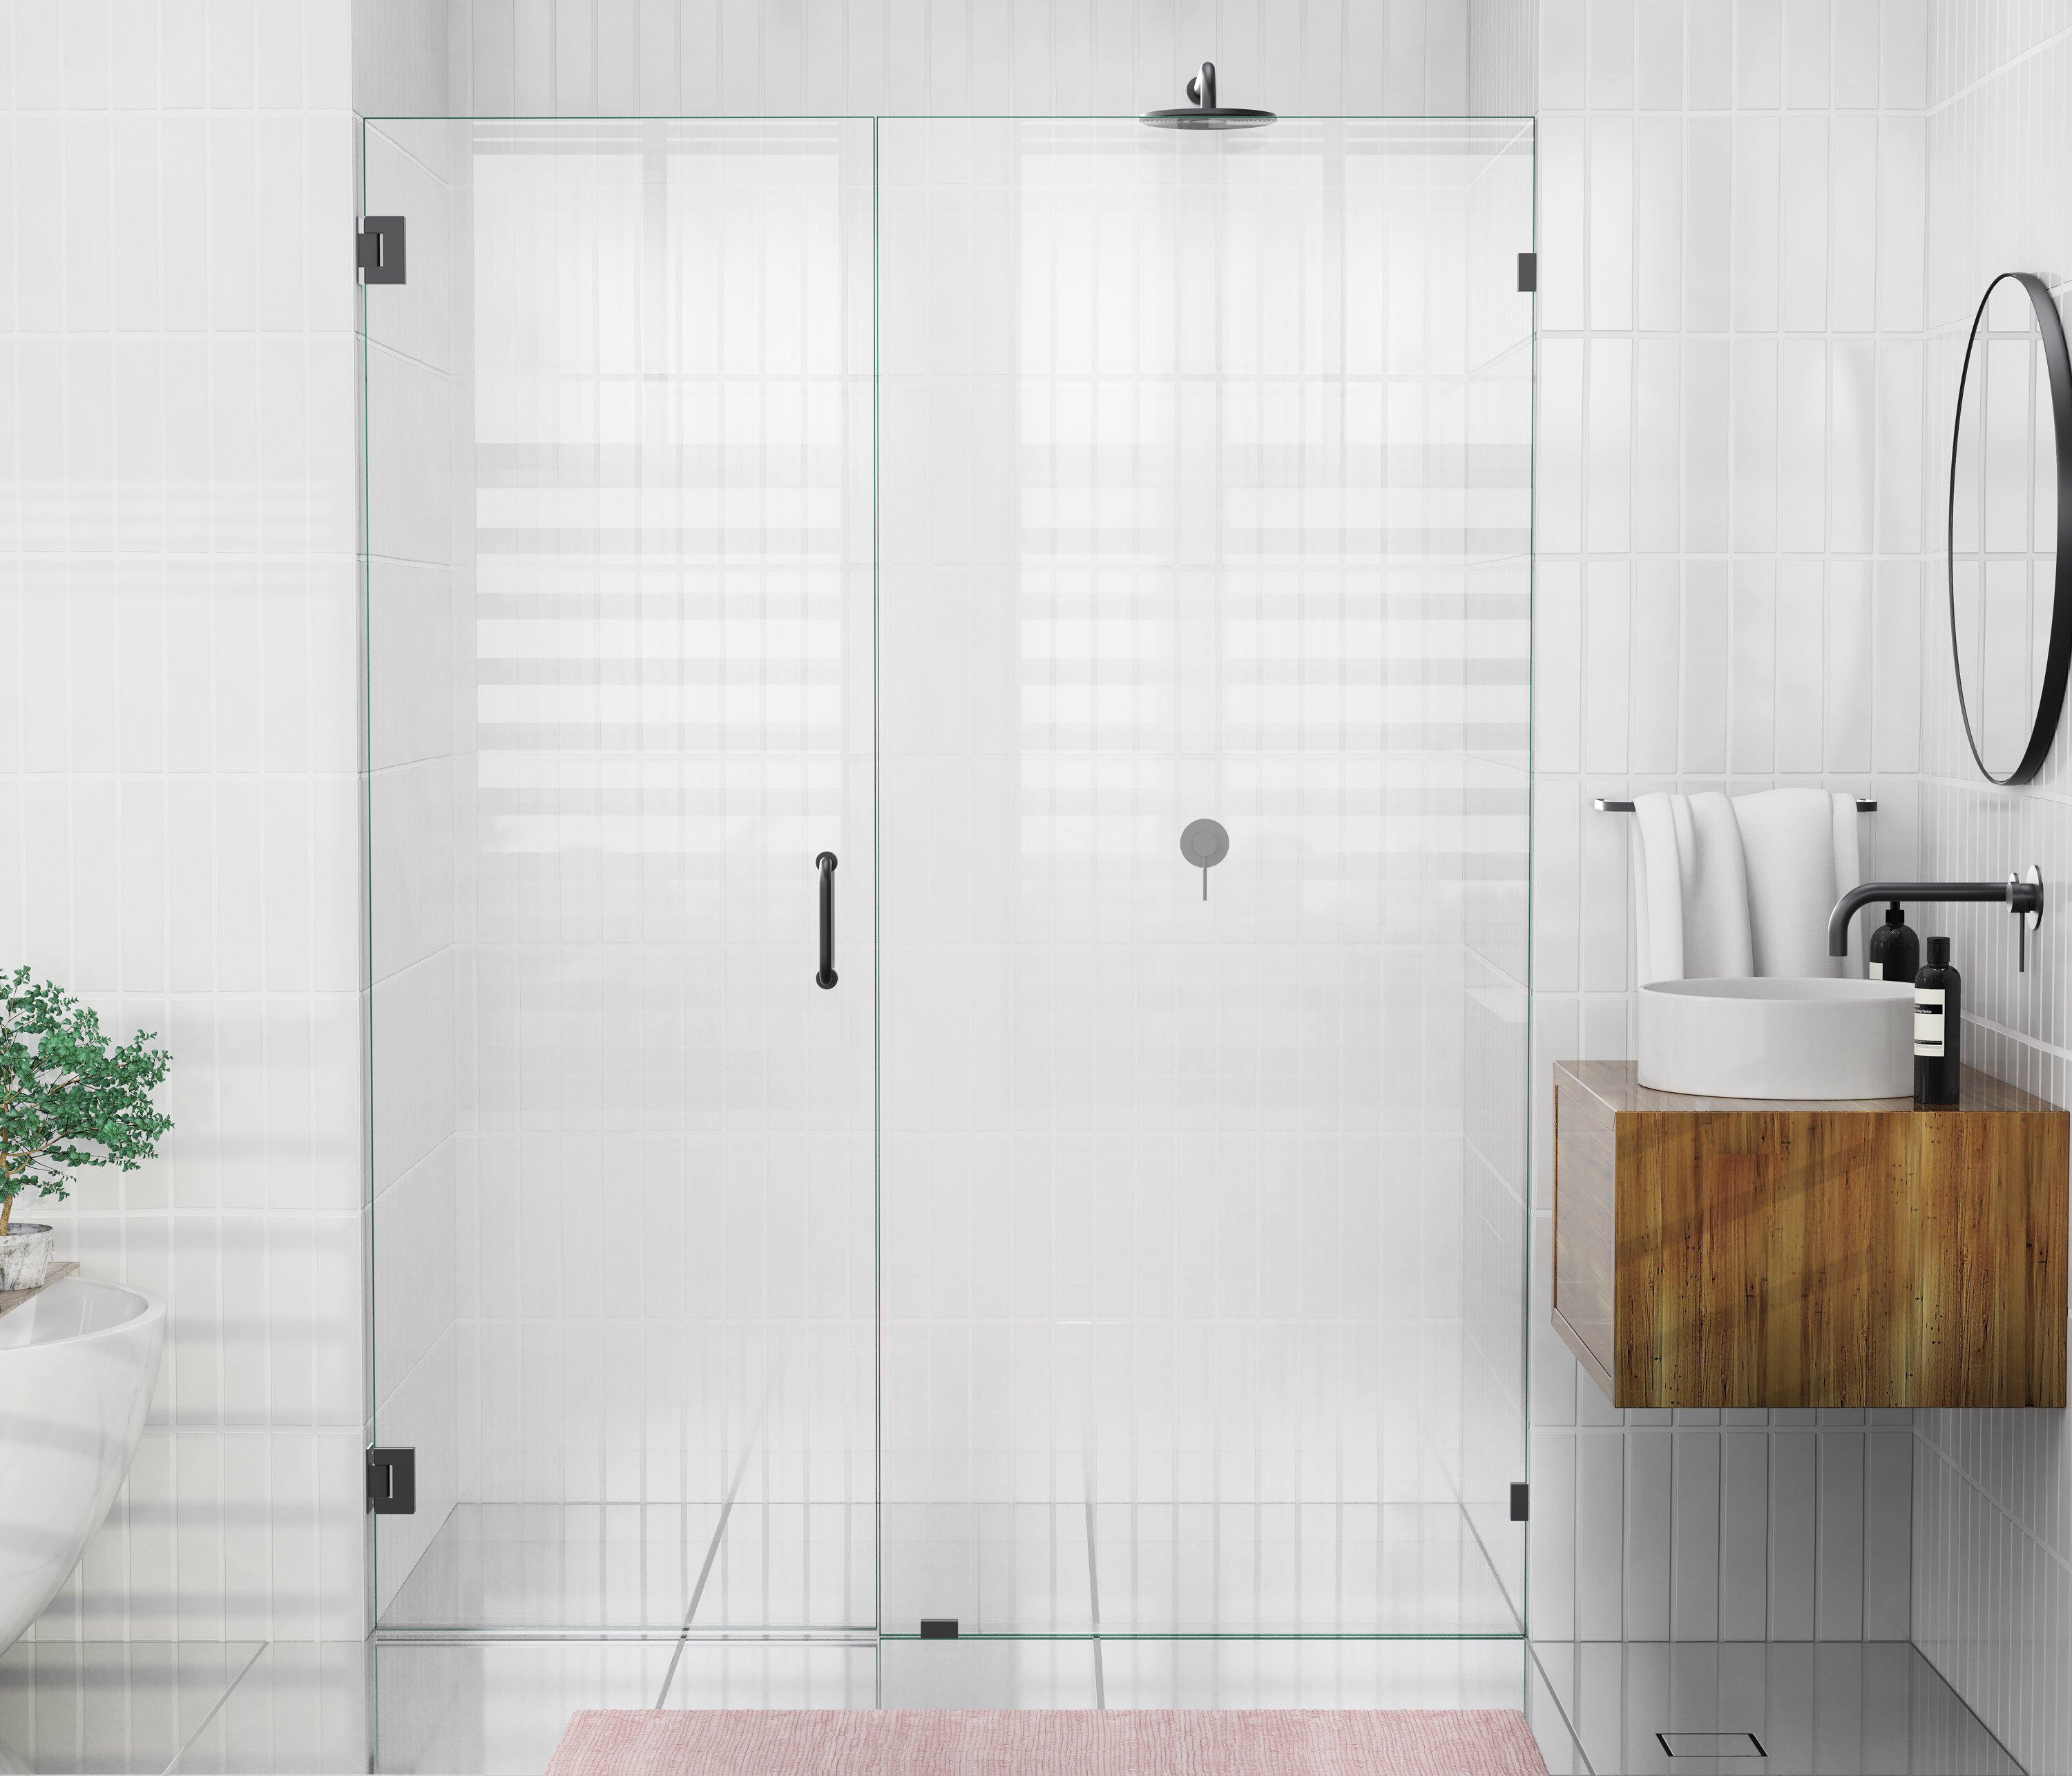 Frameless Shower Doors Customized Shower Enclosure